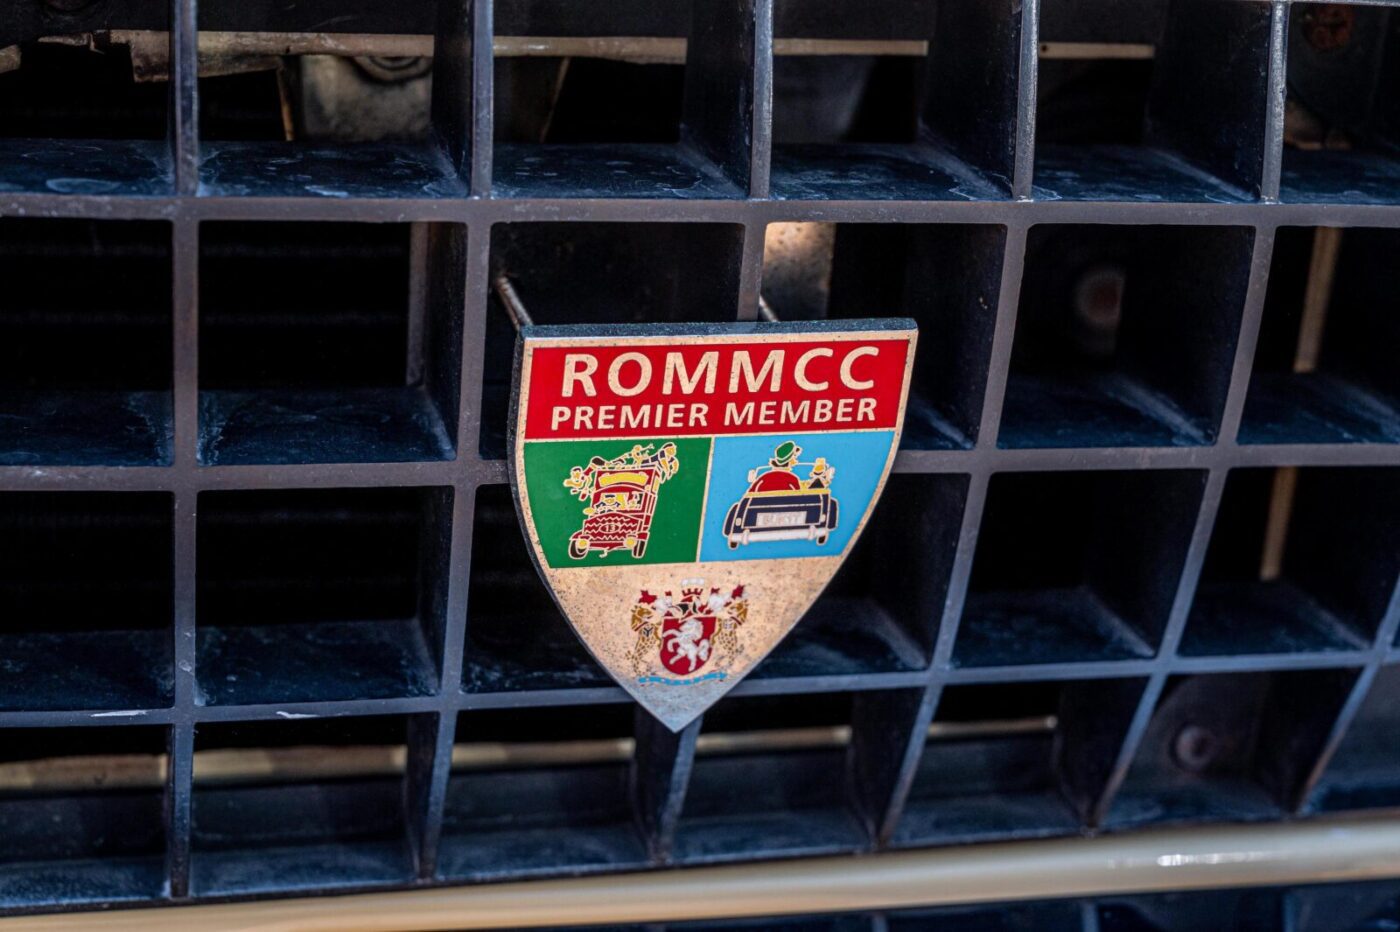 Triumph ROMMCC